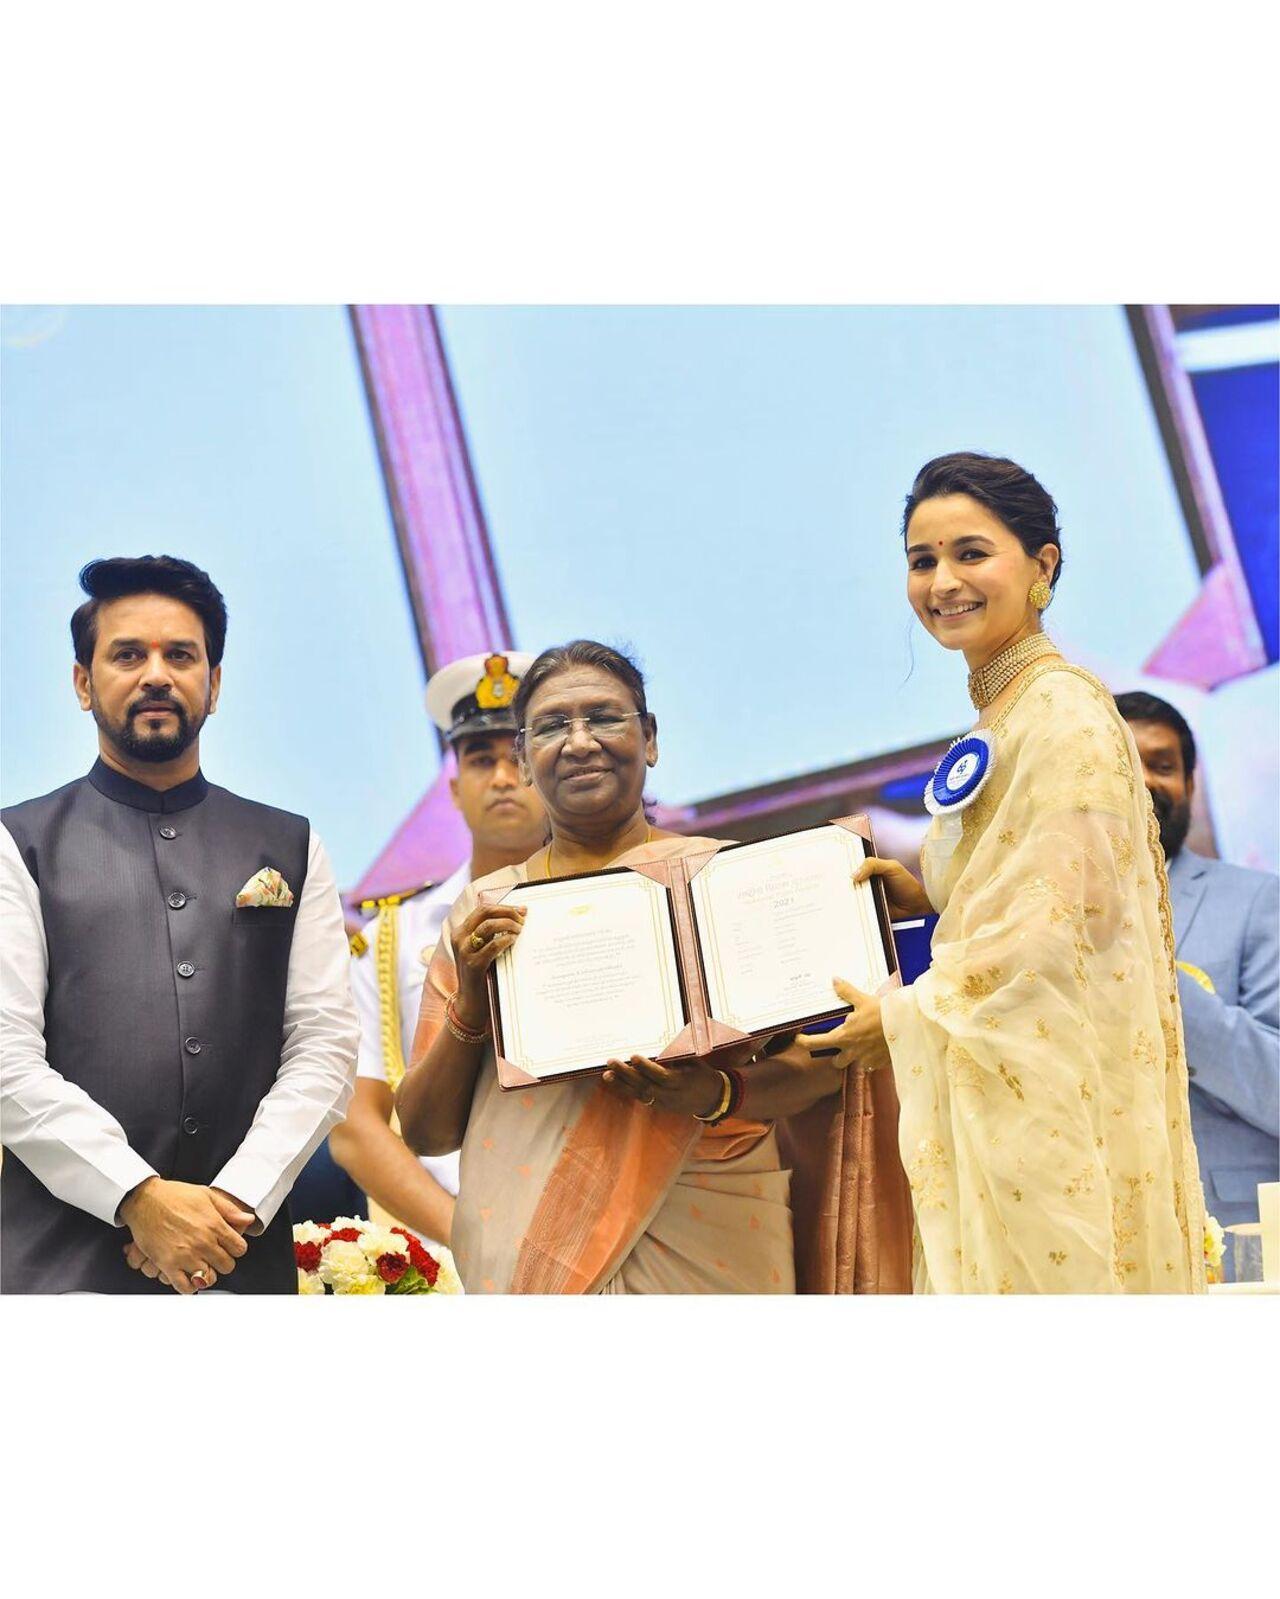 Alia Bhatt received a National Award for her performance in Sanjay Leela Bhansali-directed Gangubai Kathiawadi